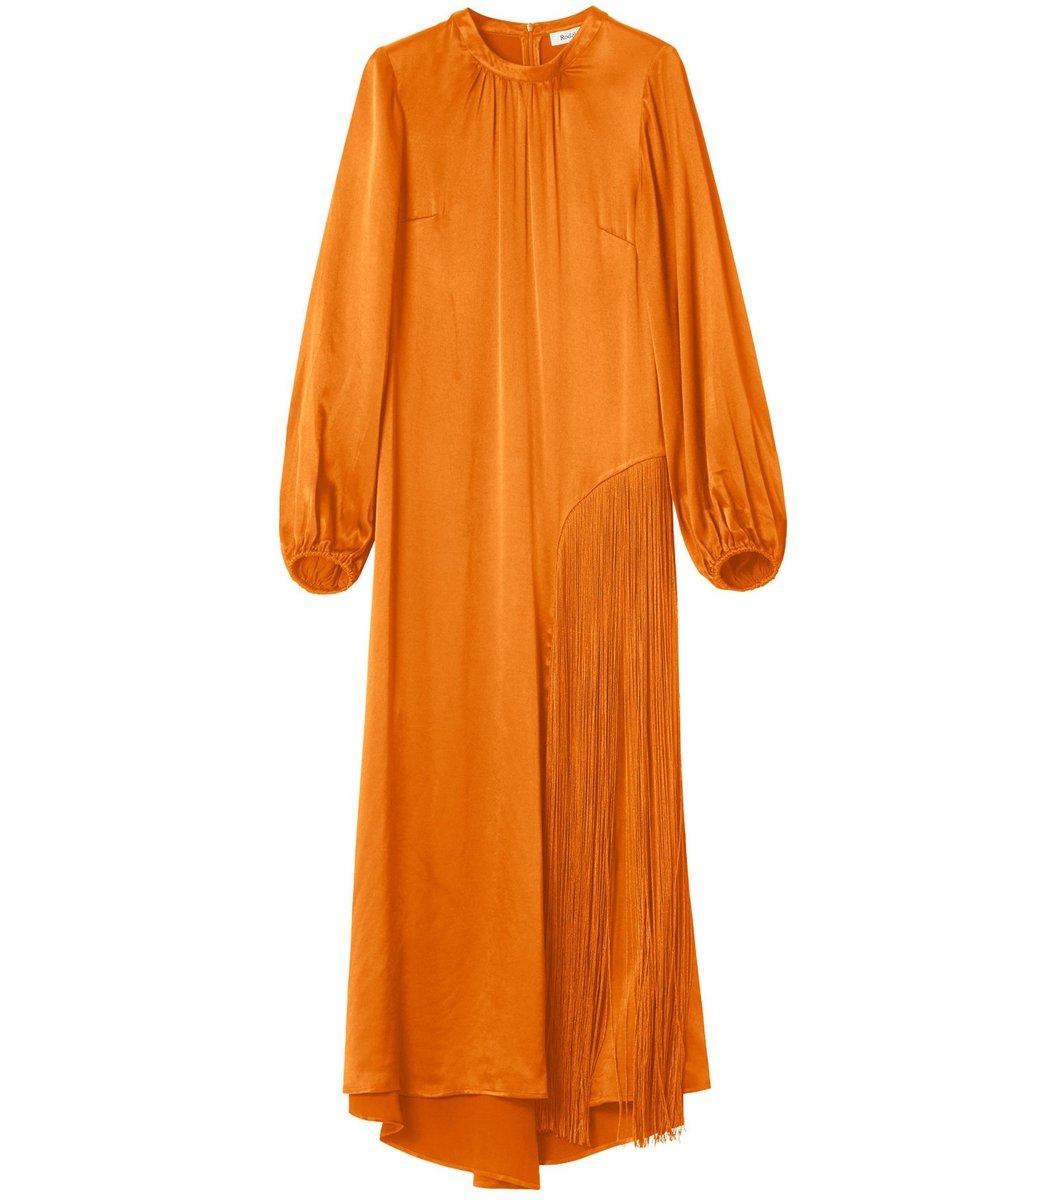 Rodebjer Majorelle Fringe Dress In Clementine in Orange - Lyst